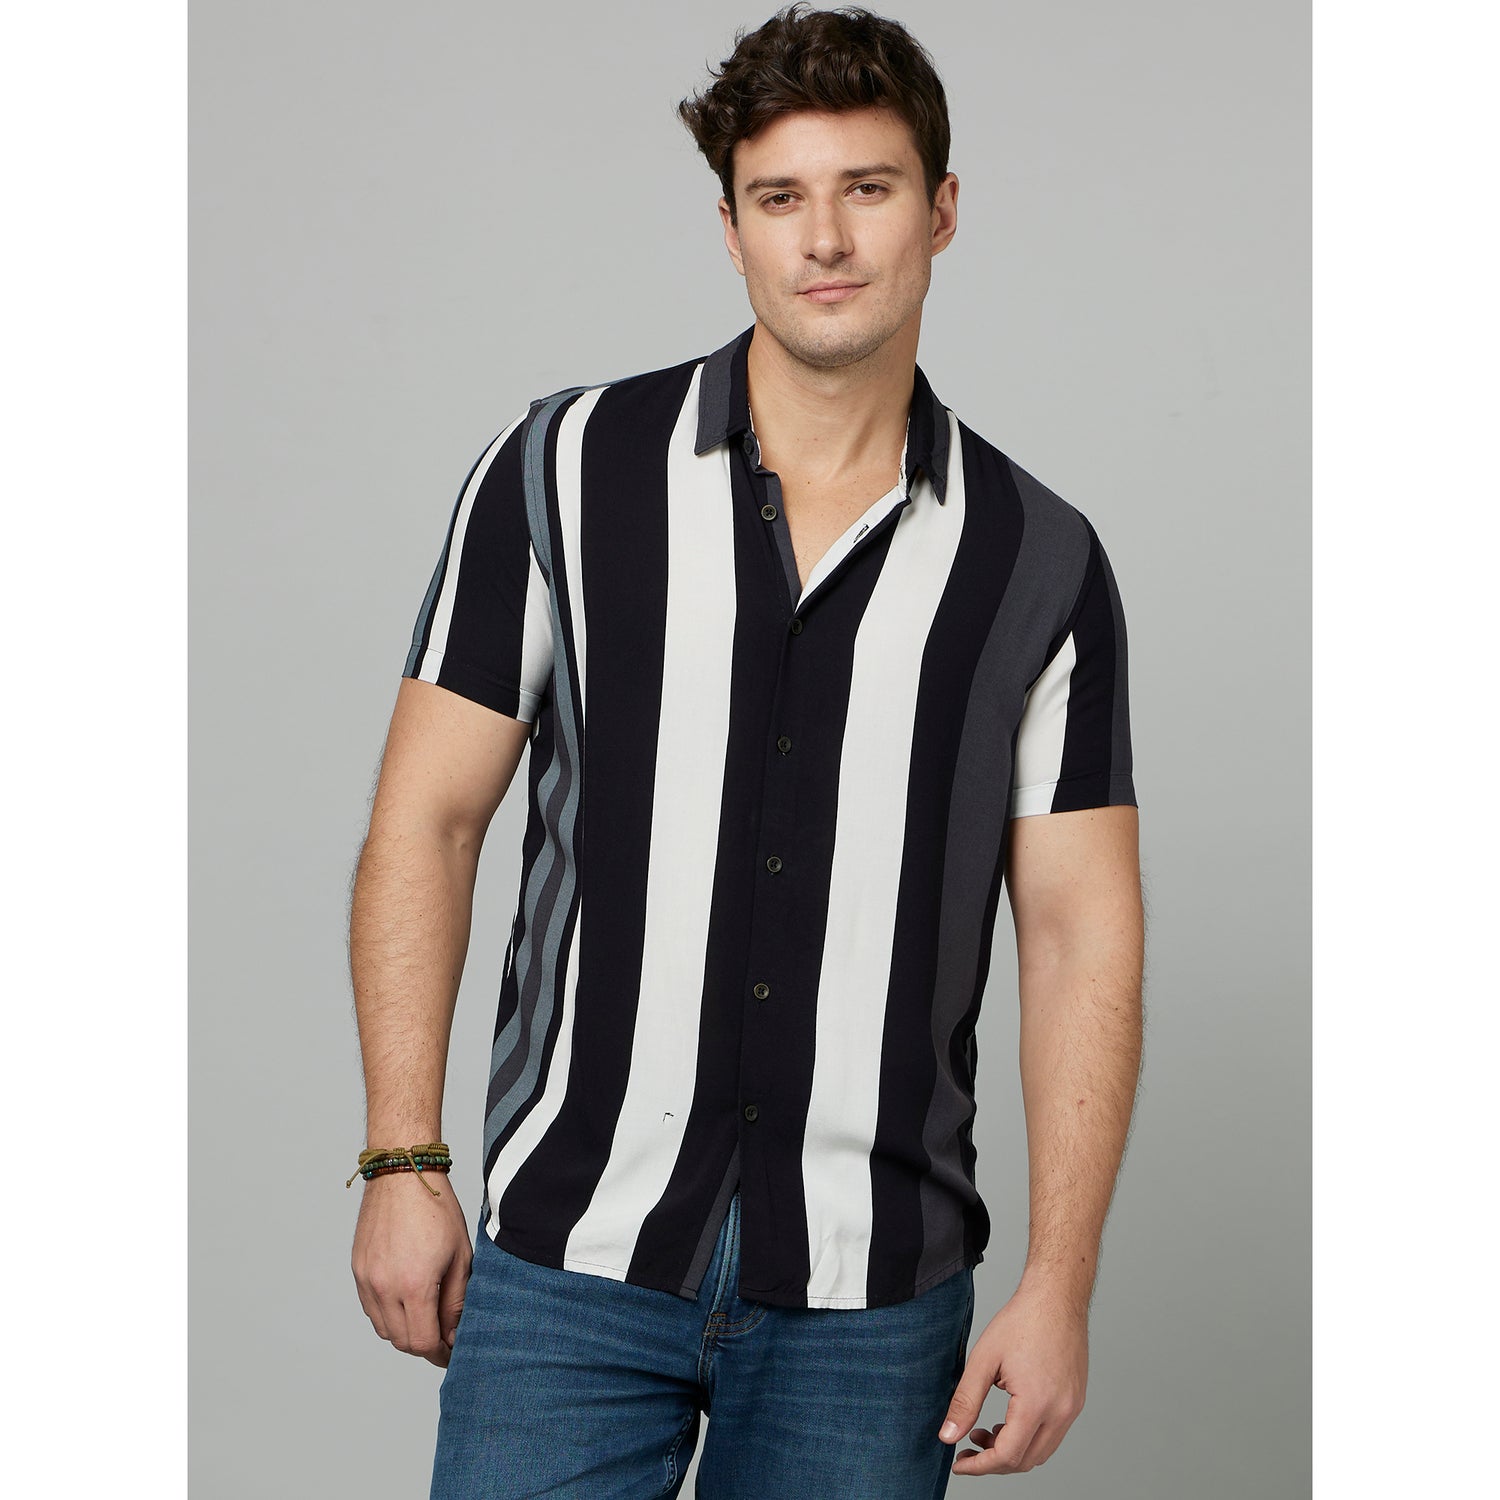 Black Classic Opaque Vertical Striped Casual Shirt (FAVISLINE)